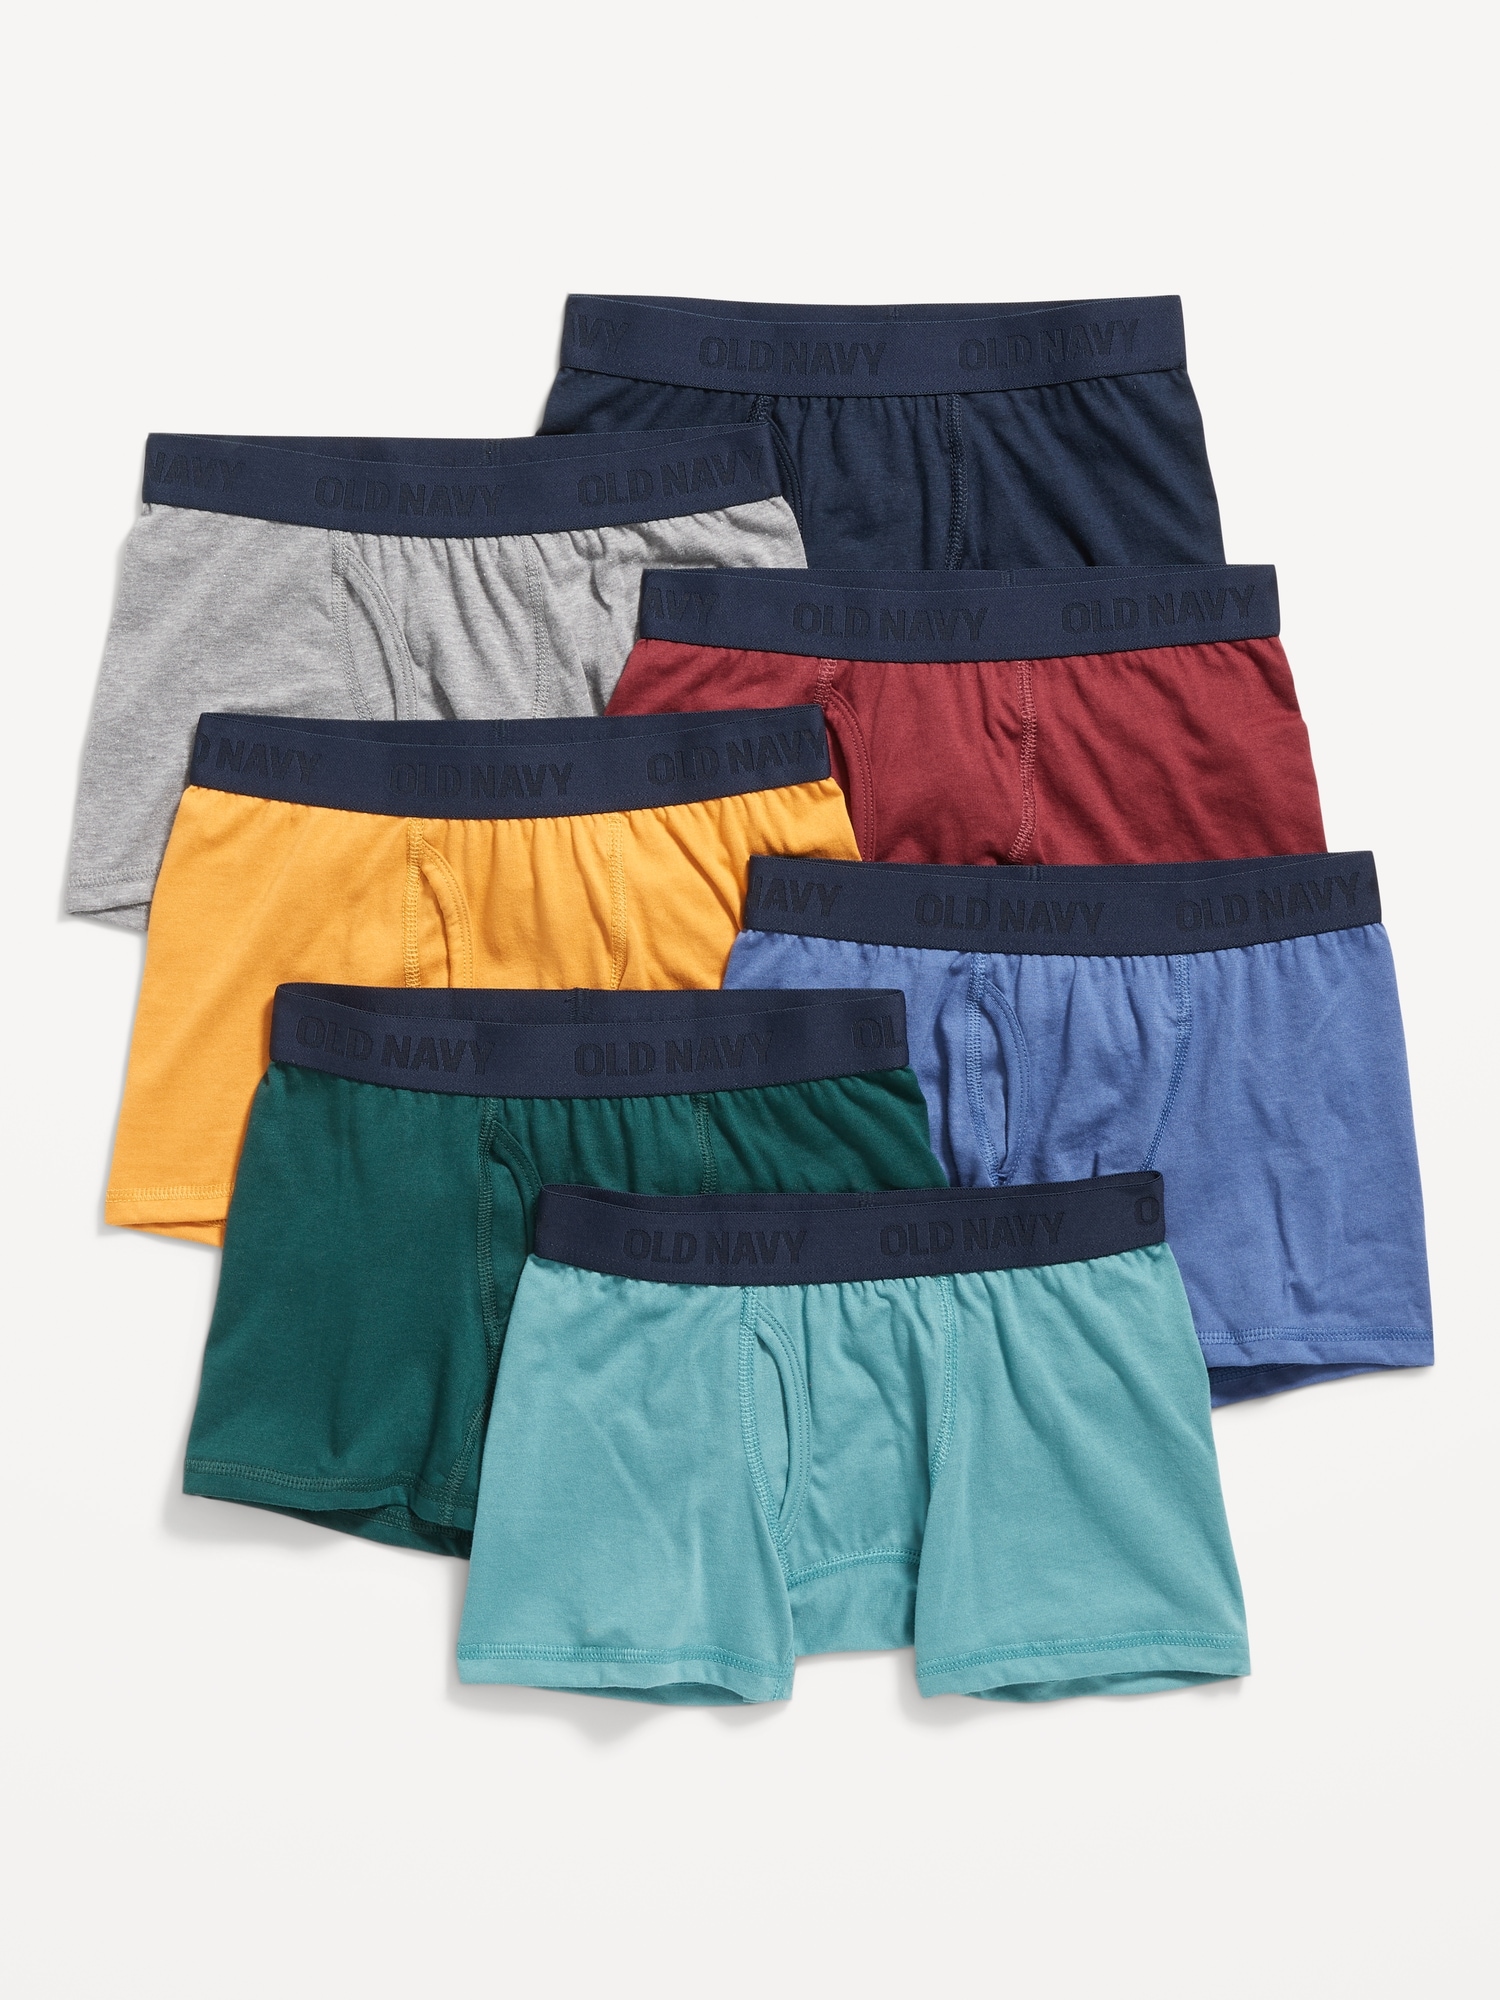 Boxer-Briefs Underwear 7-Pack for Boys | Old Navy